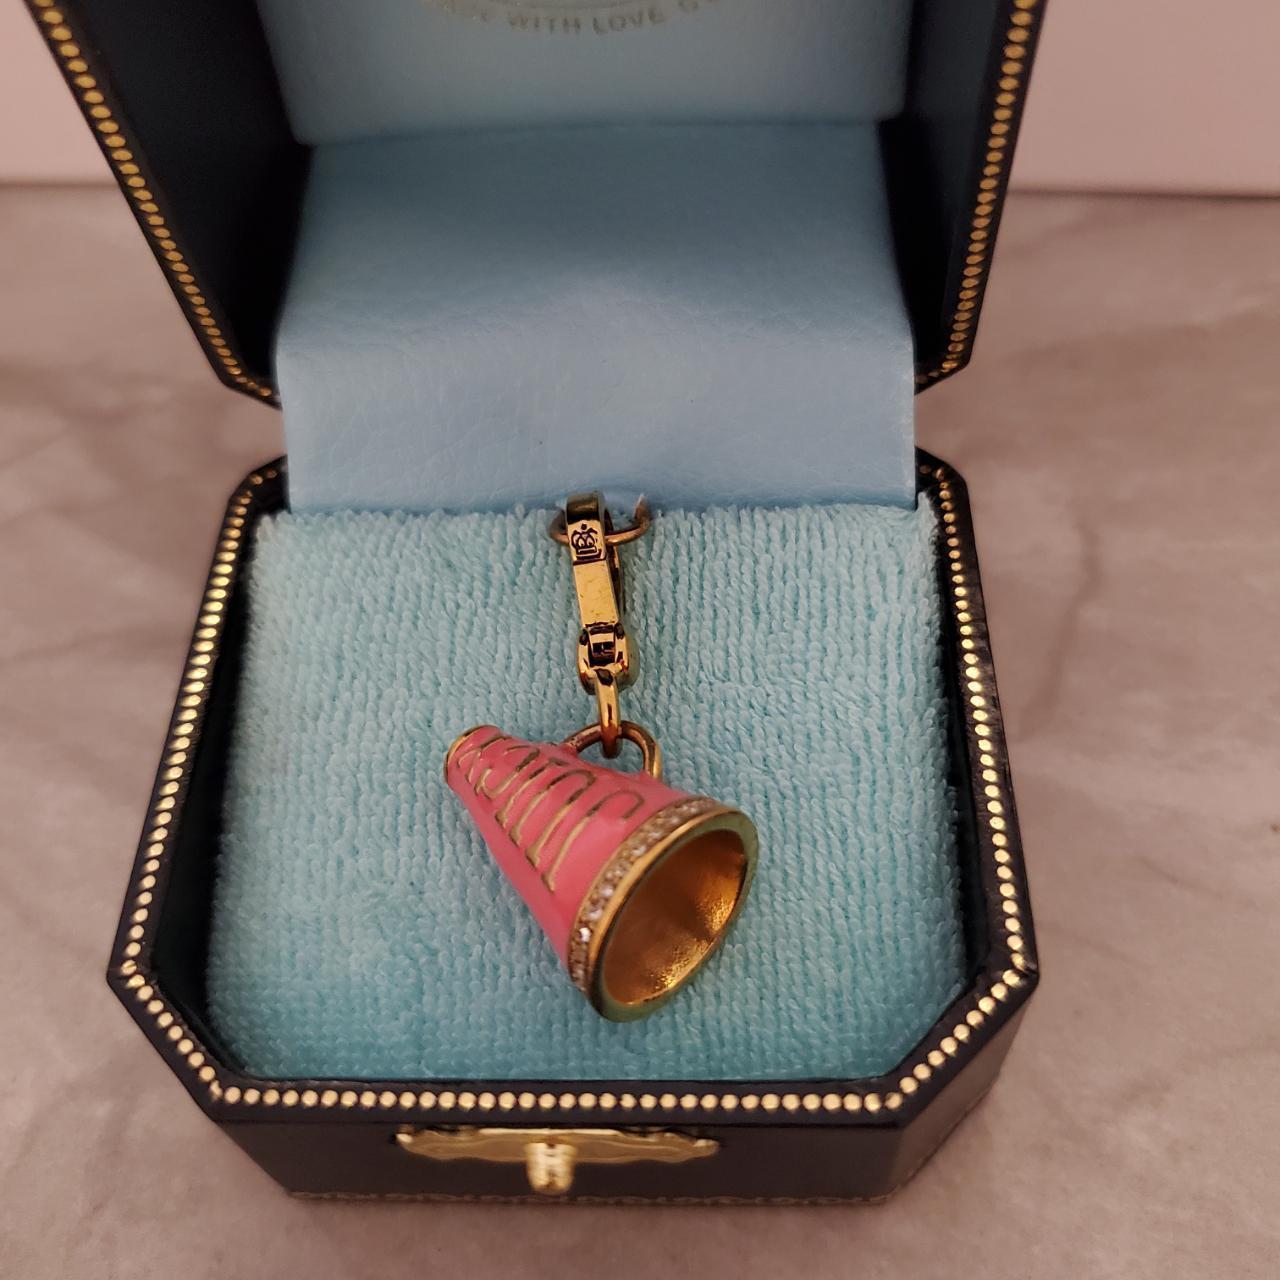 Juicy couture bracelet 💕 Pink jeweled logo bracelet - Depop